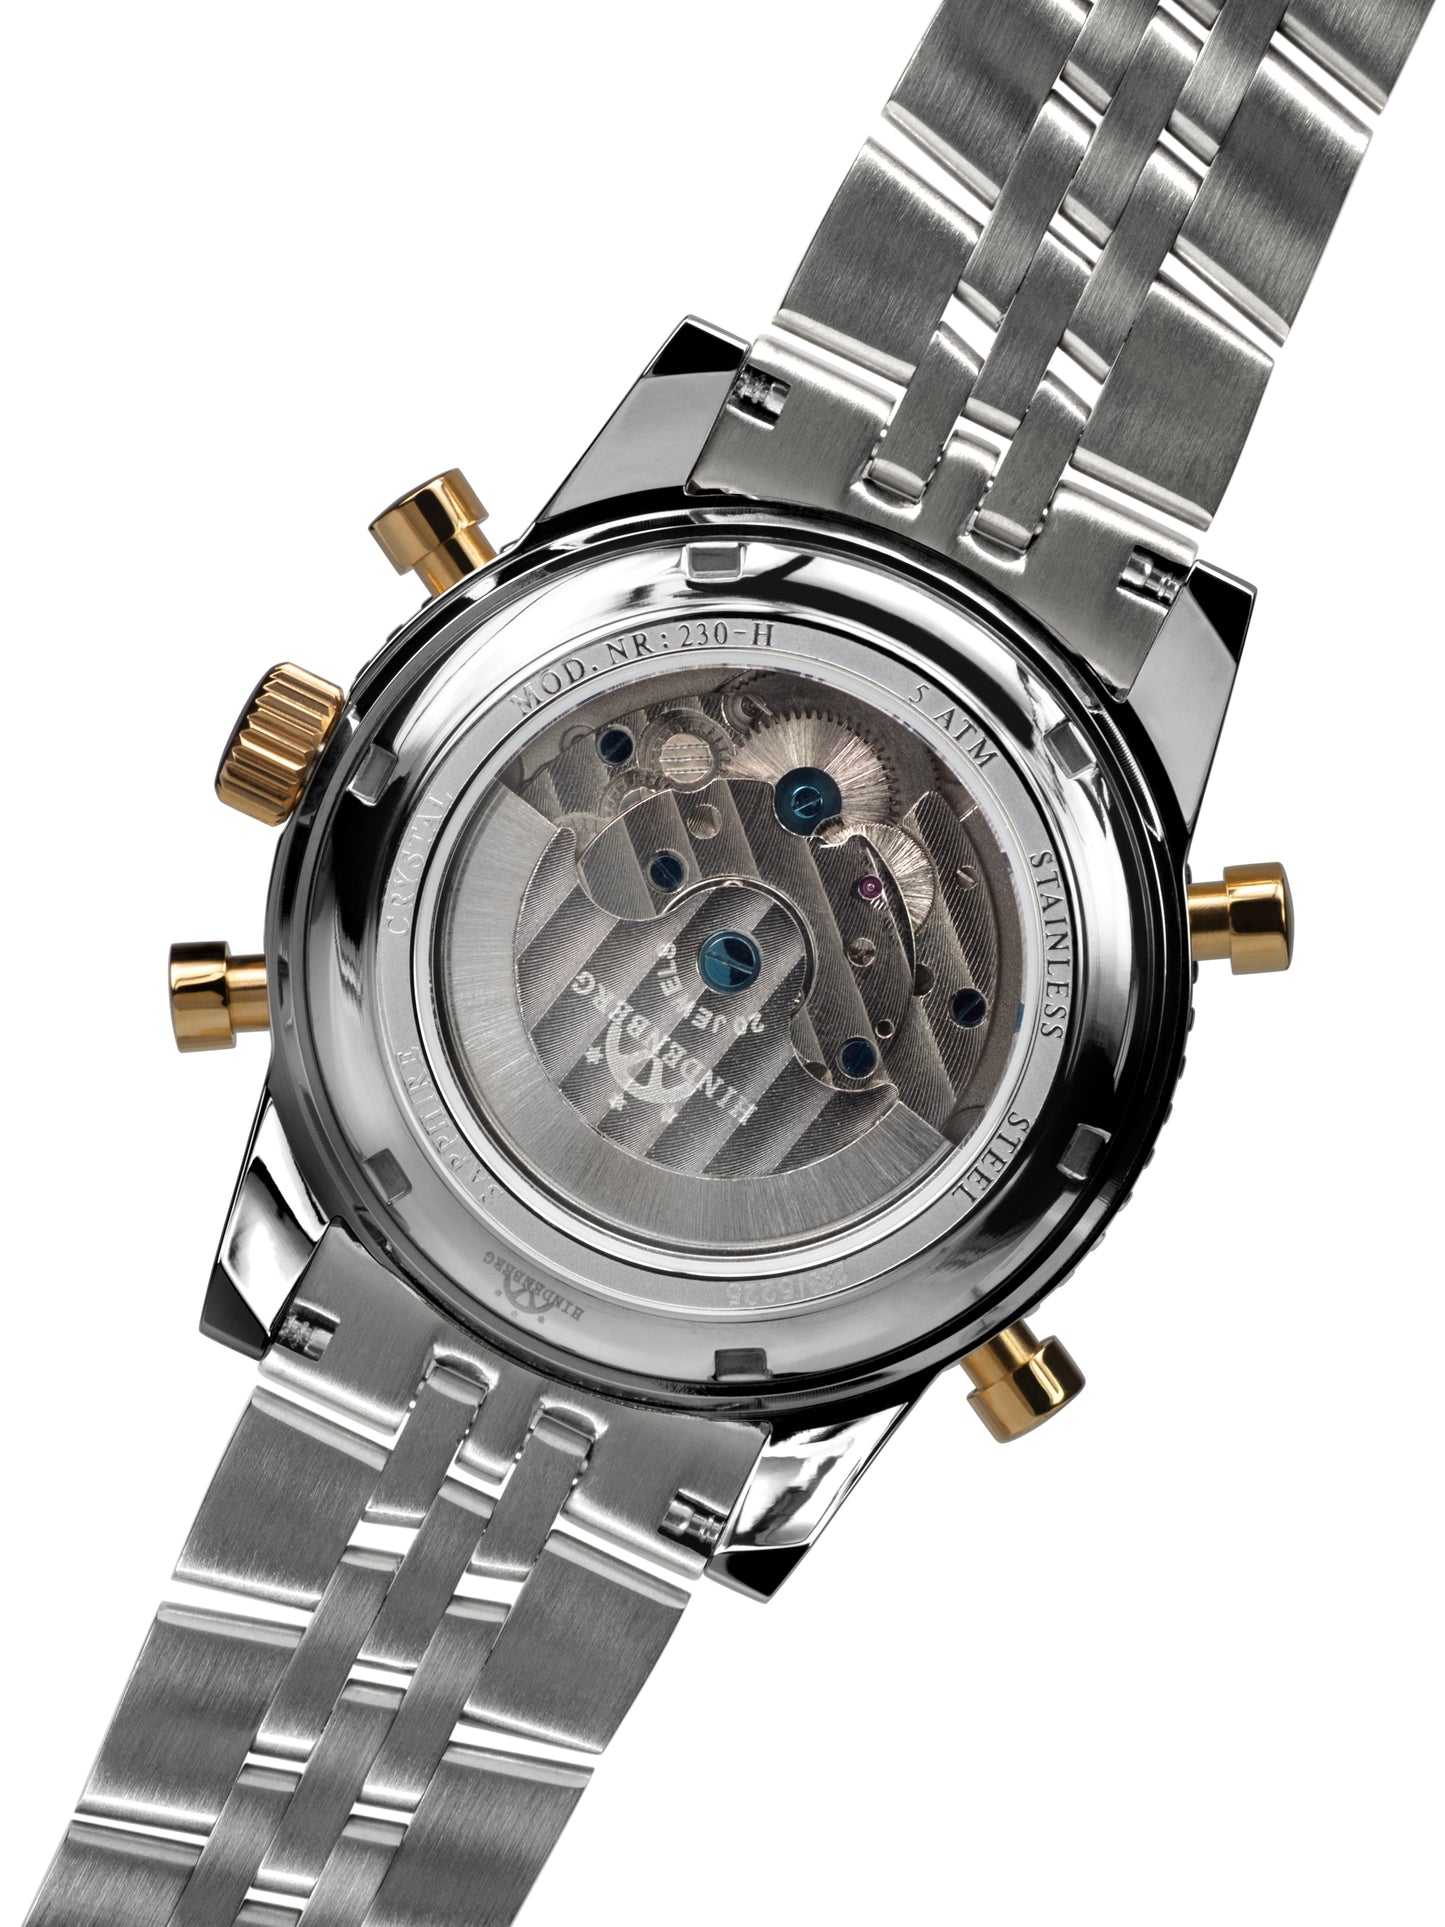 Automatic watches — Air Professional — Hindenberg — bicolour black